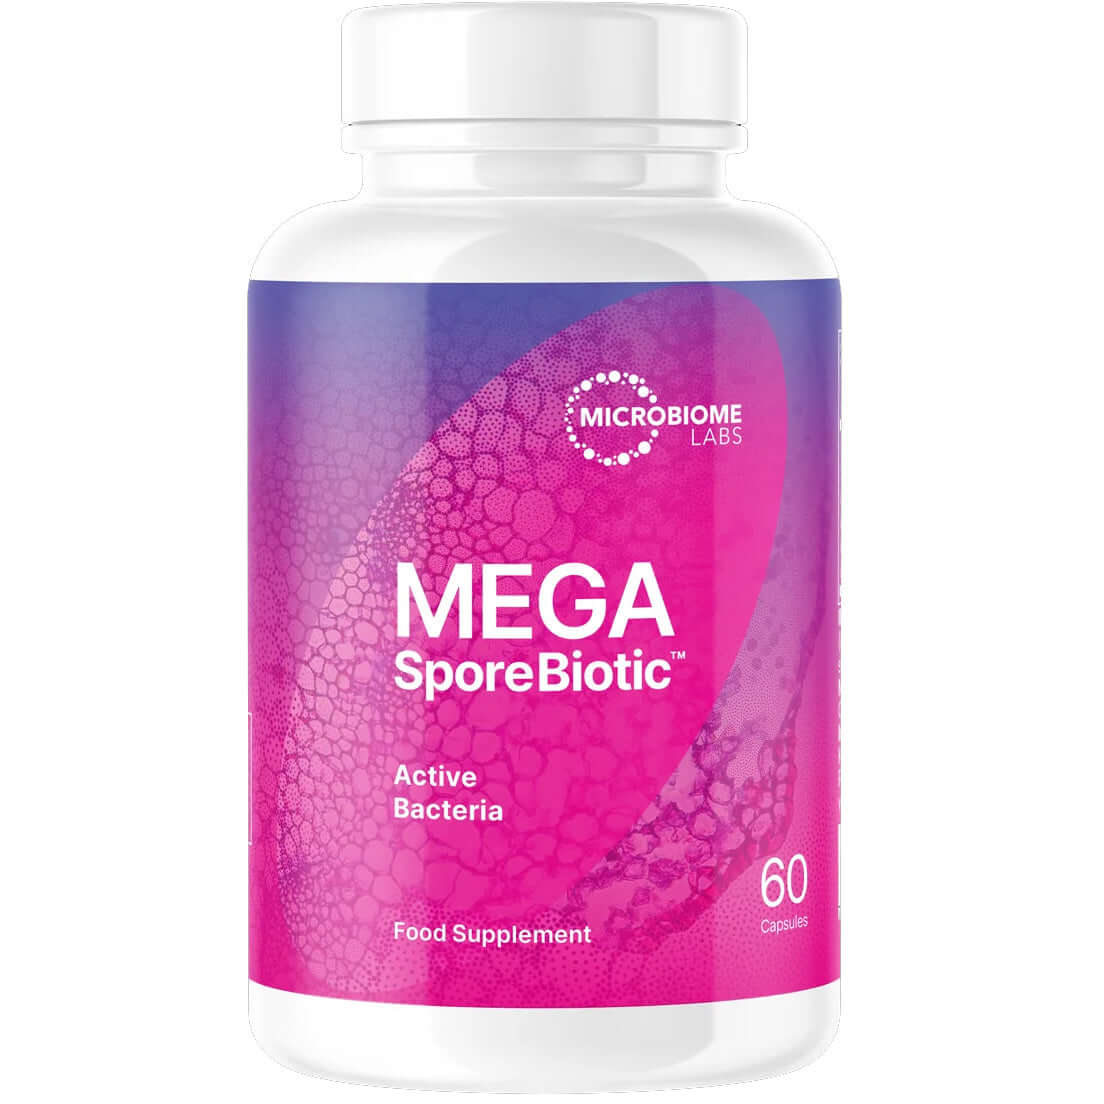 Microbiome Labs MegaSporeBiotic Probiotics Supplement